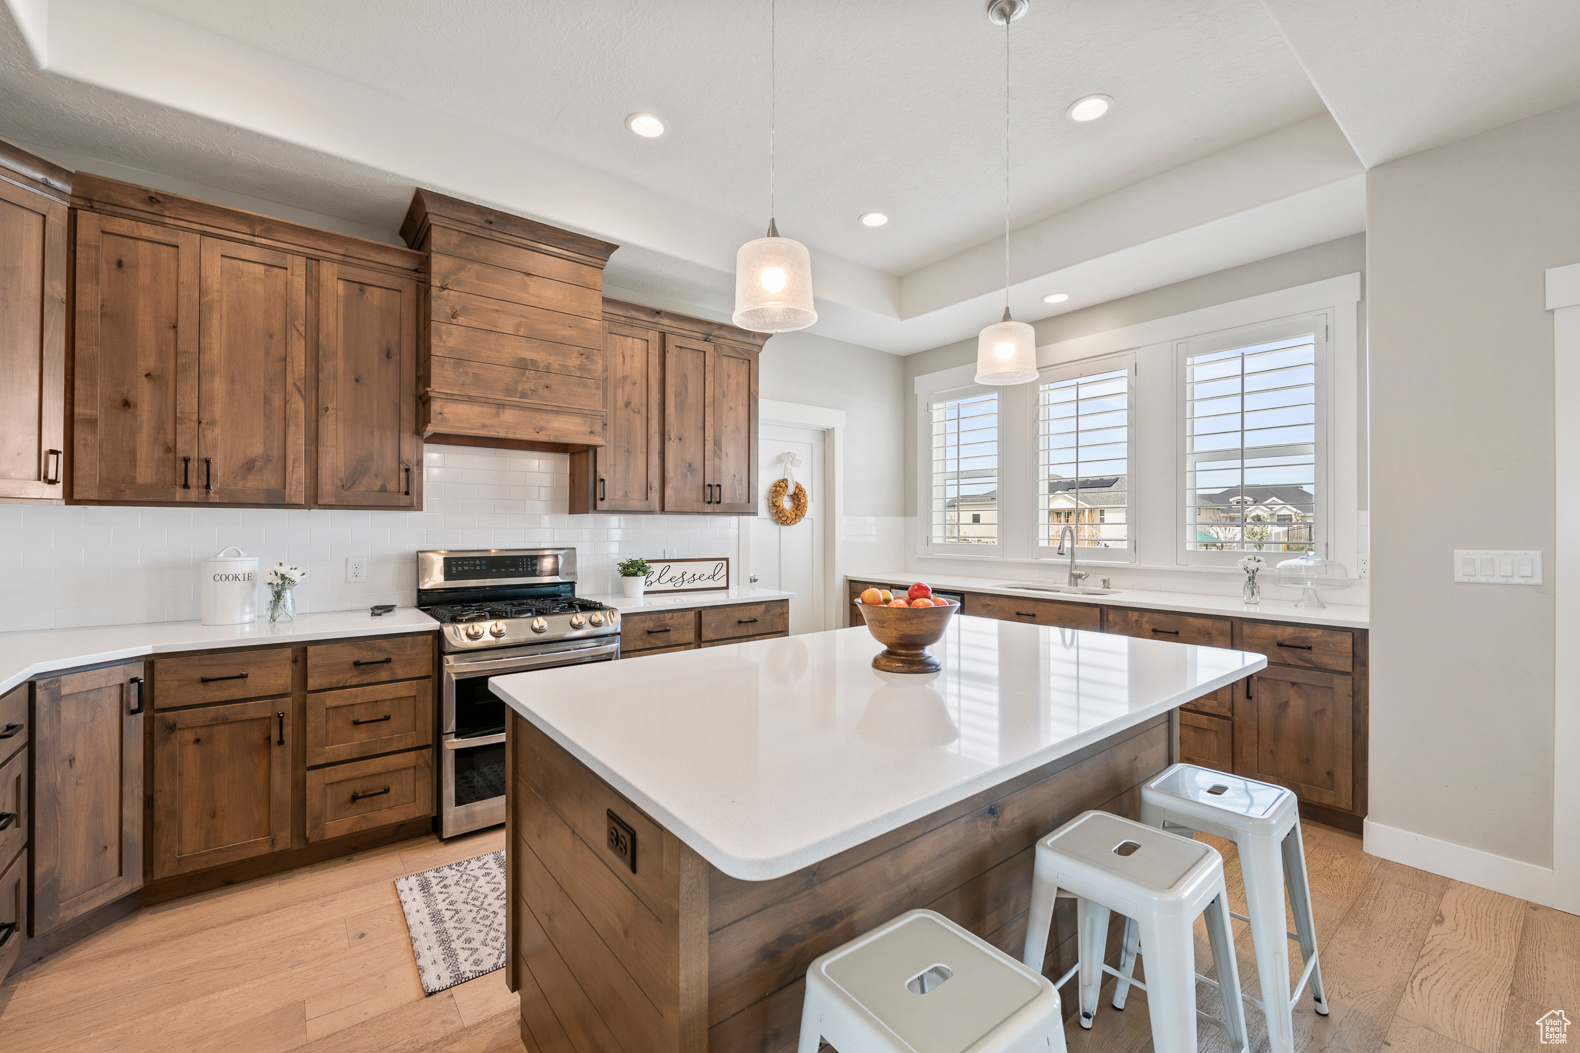 Kitchen with decorative light fixtures, light hardwood / wood-style flooring, double oven range, custom range hood, and a kitchen island